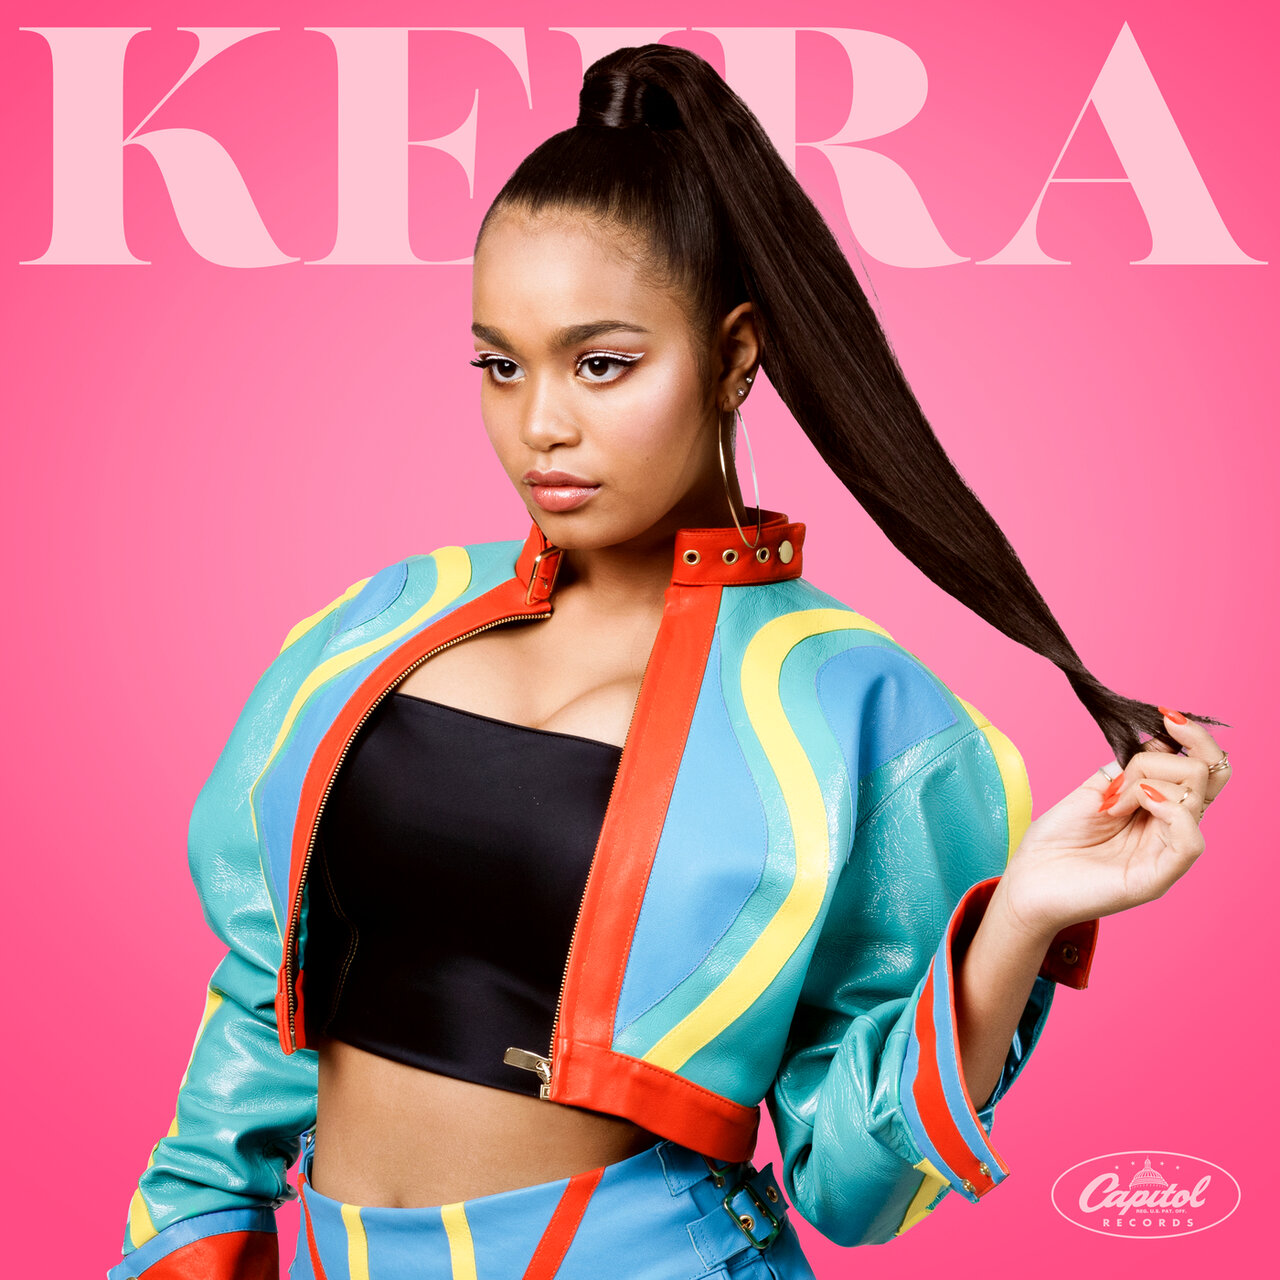 Keira No Business On The Dancefloor cover artwork